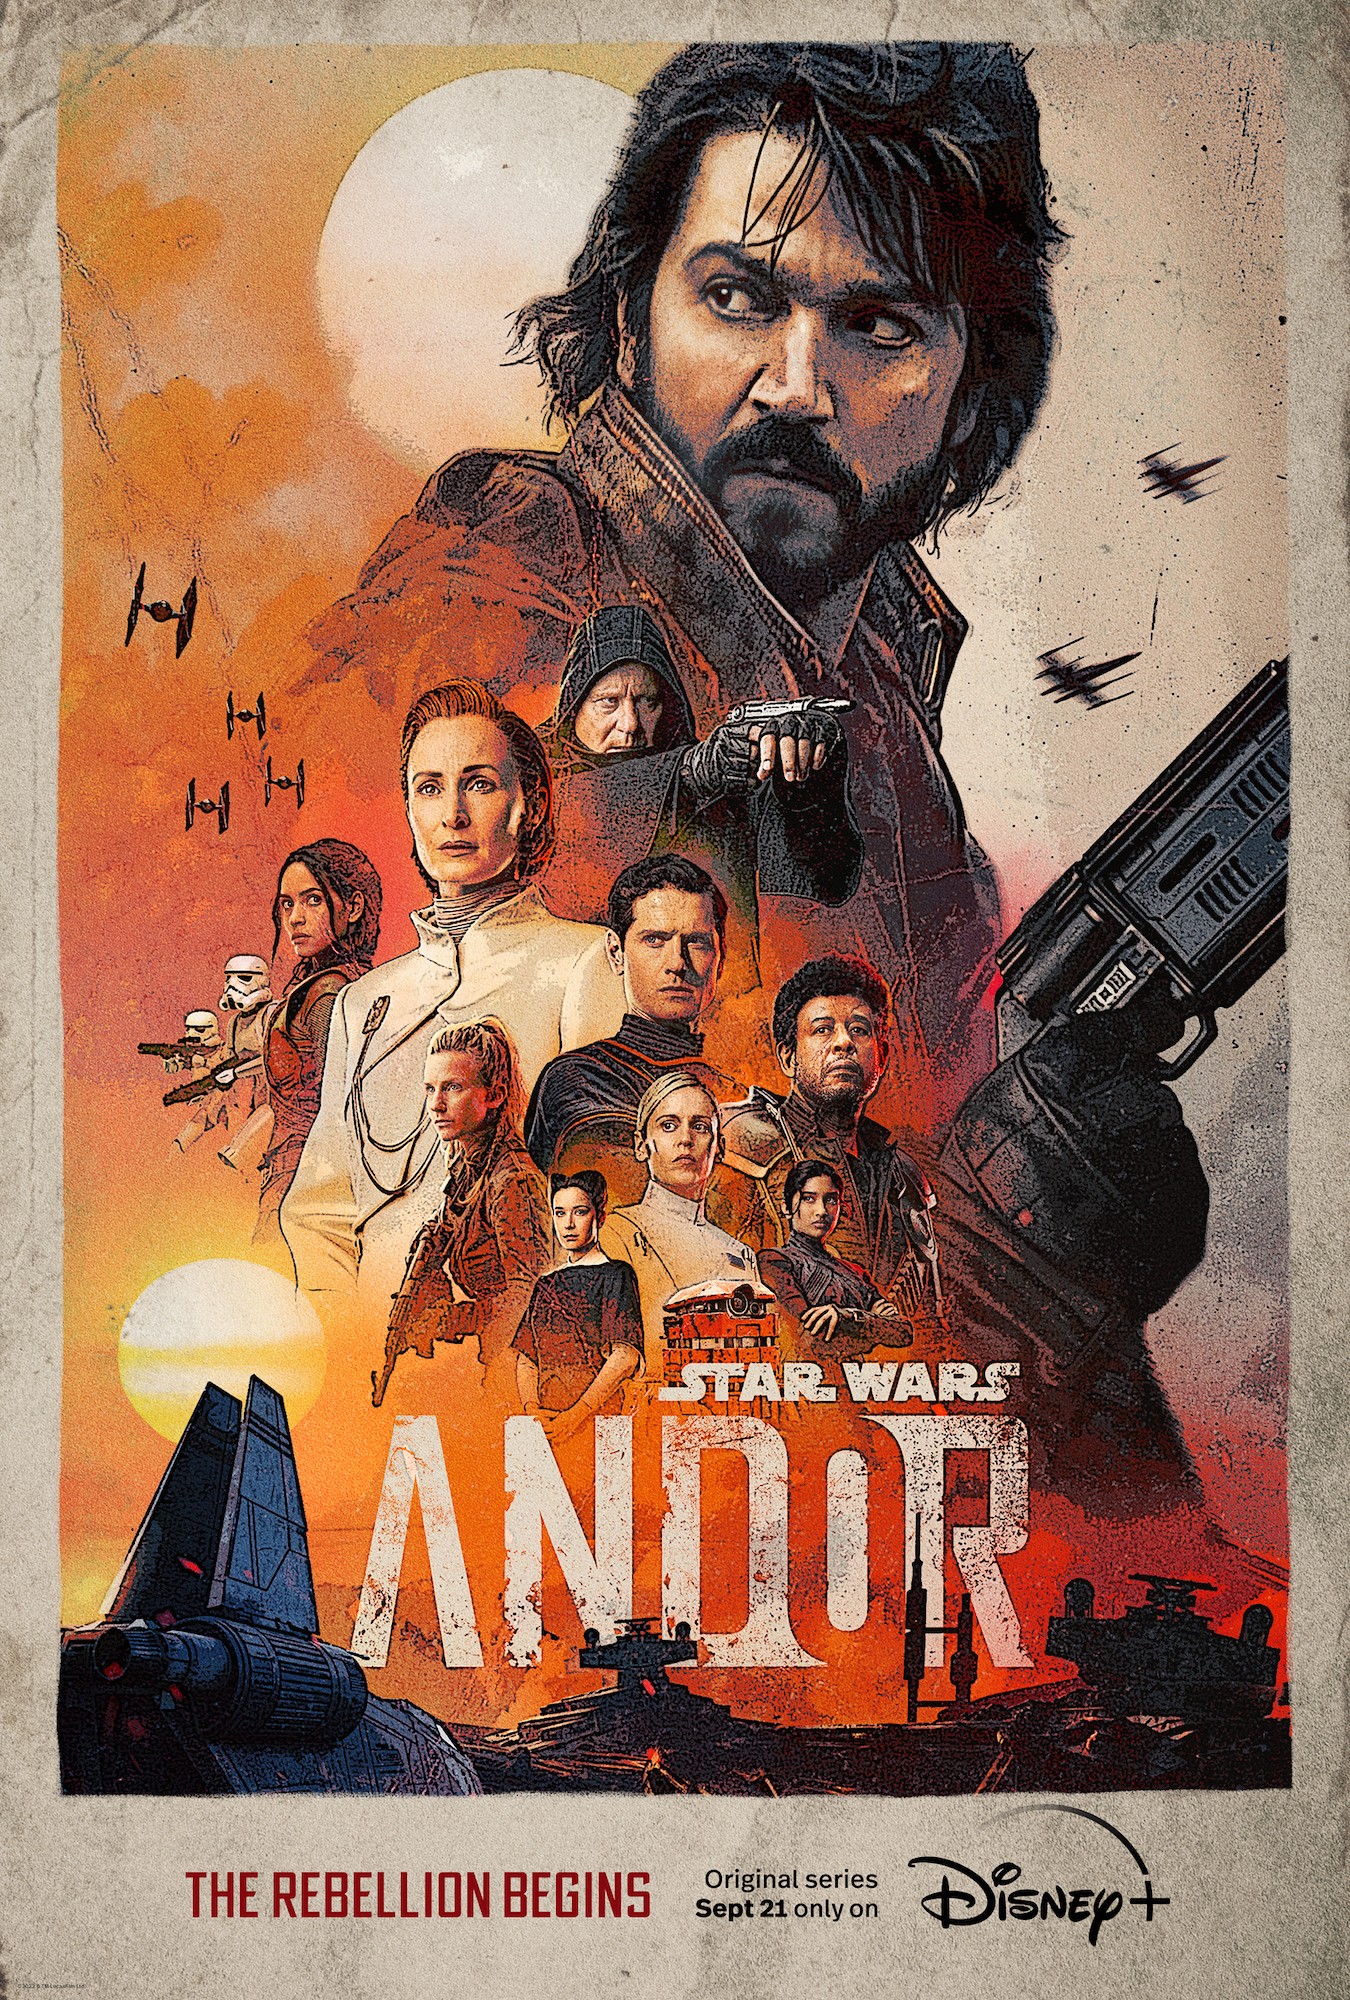 First Reviews: Andor, review